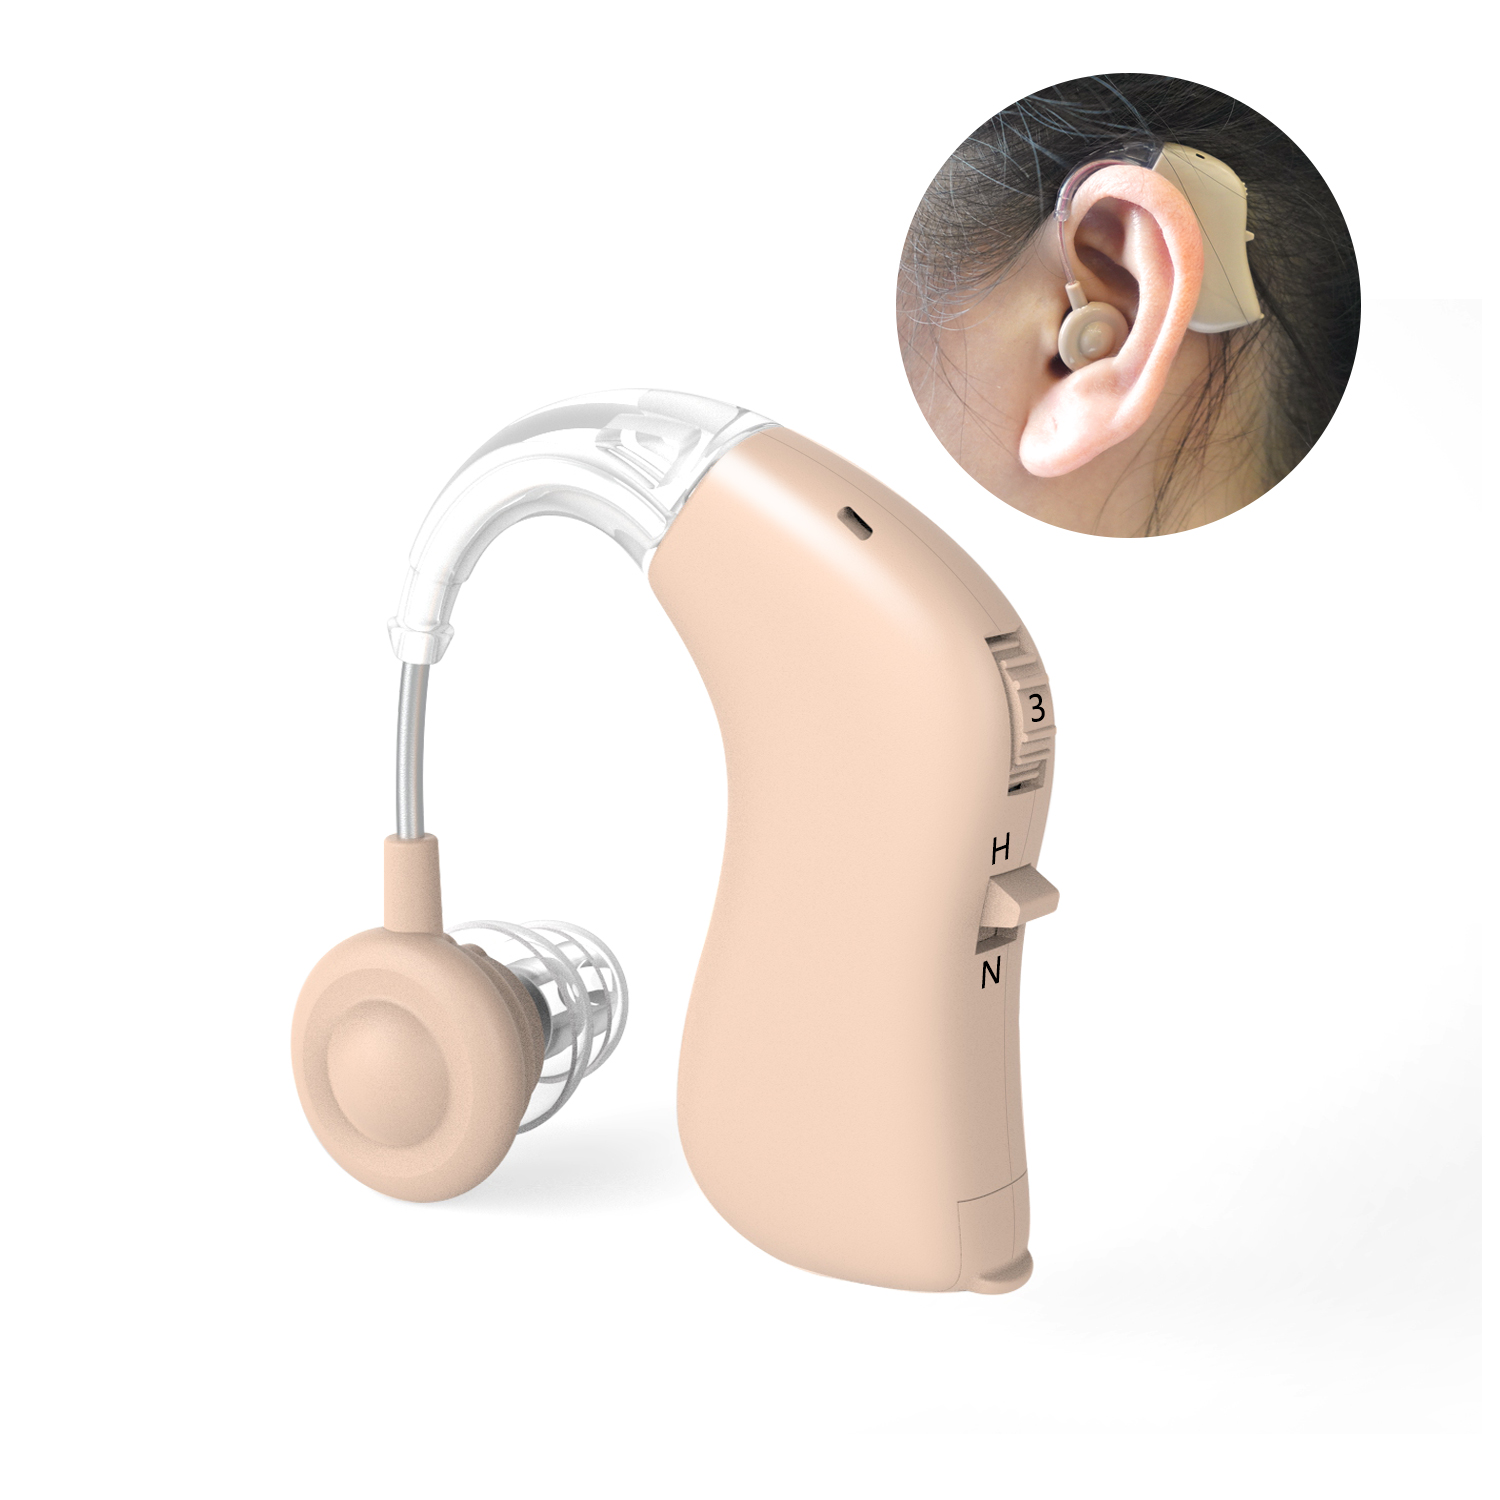 G28 hearing aids2